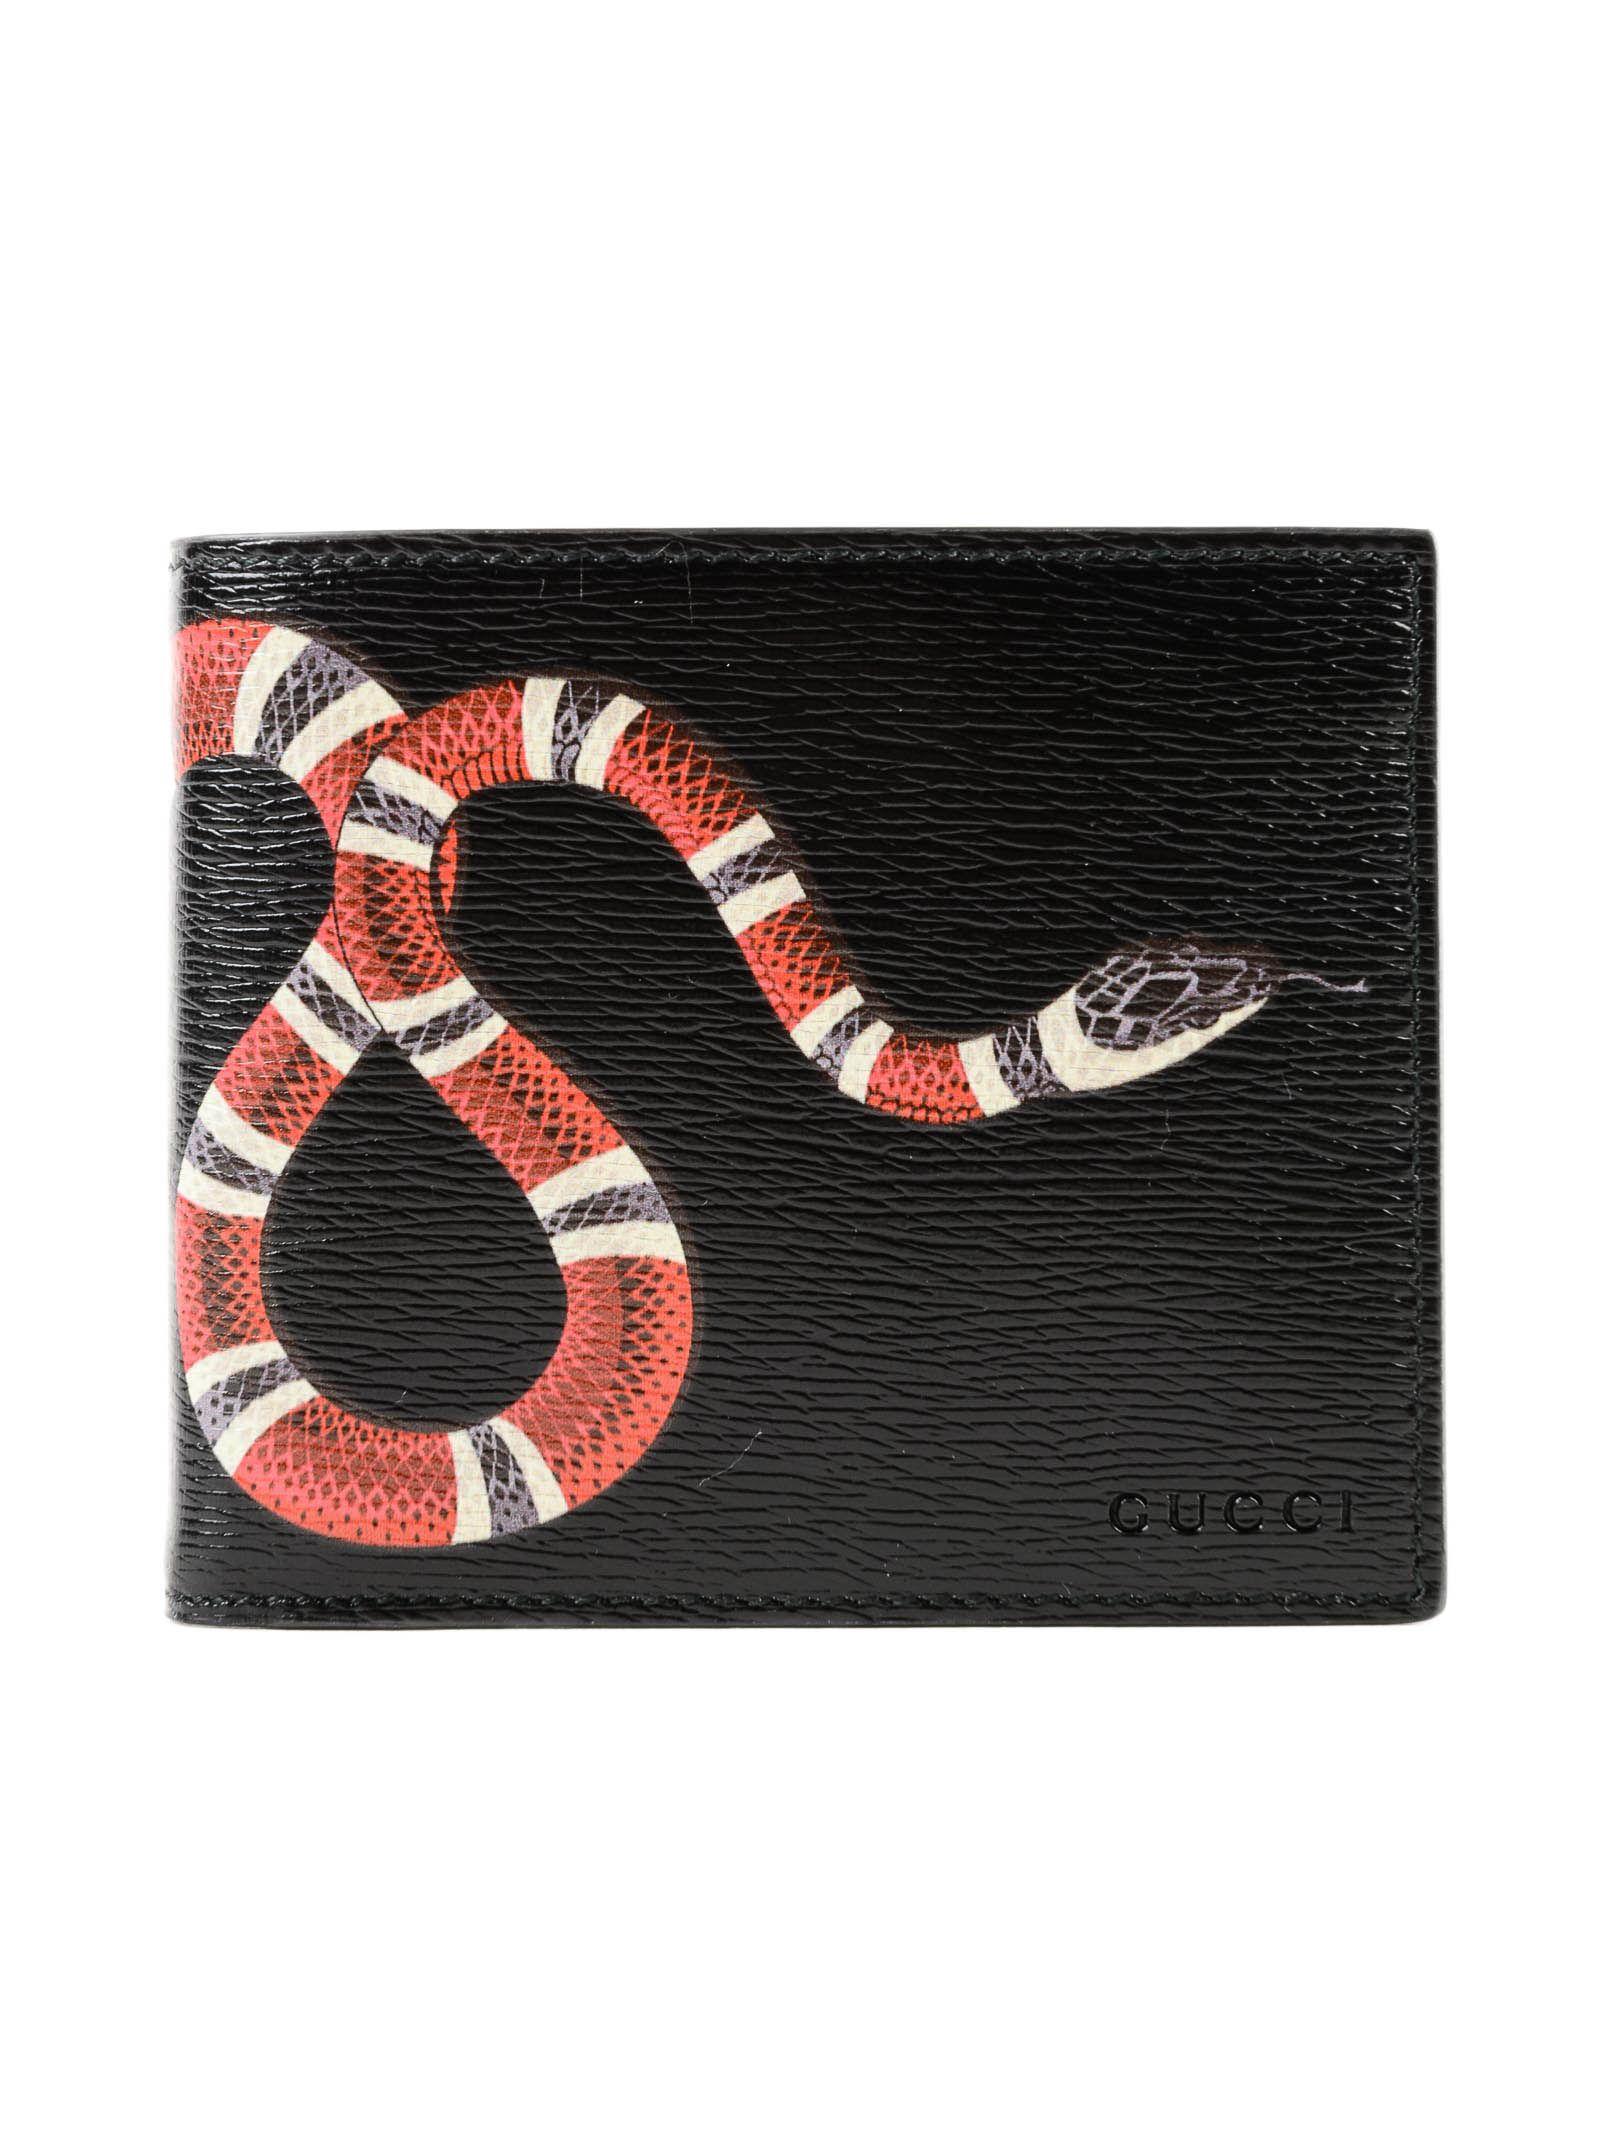 Змейка деньги. Kingsnake Gucci. Молочная змея гуччи. Gucci Snake logo. Gucci Wallet Snake.